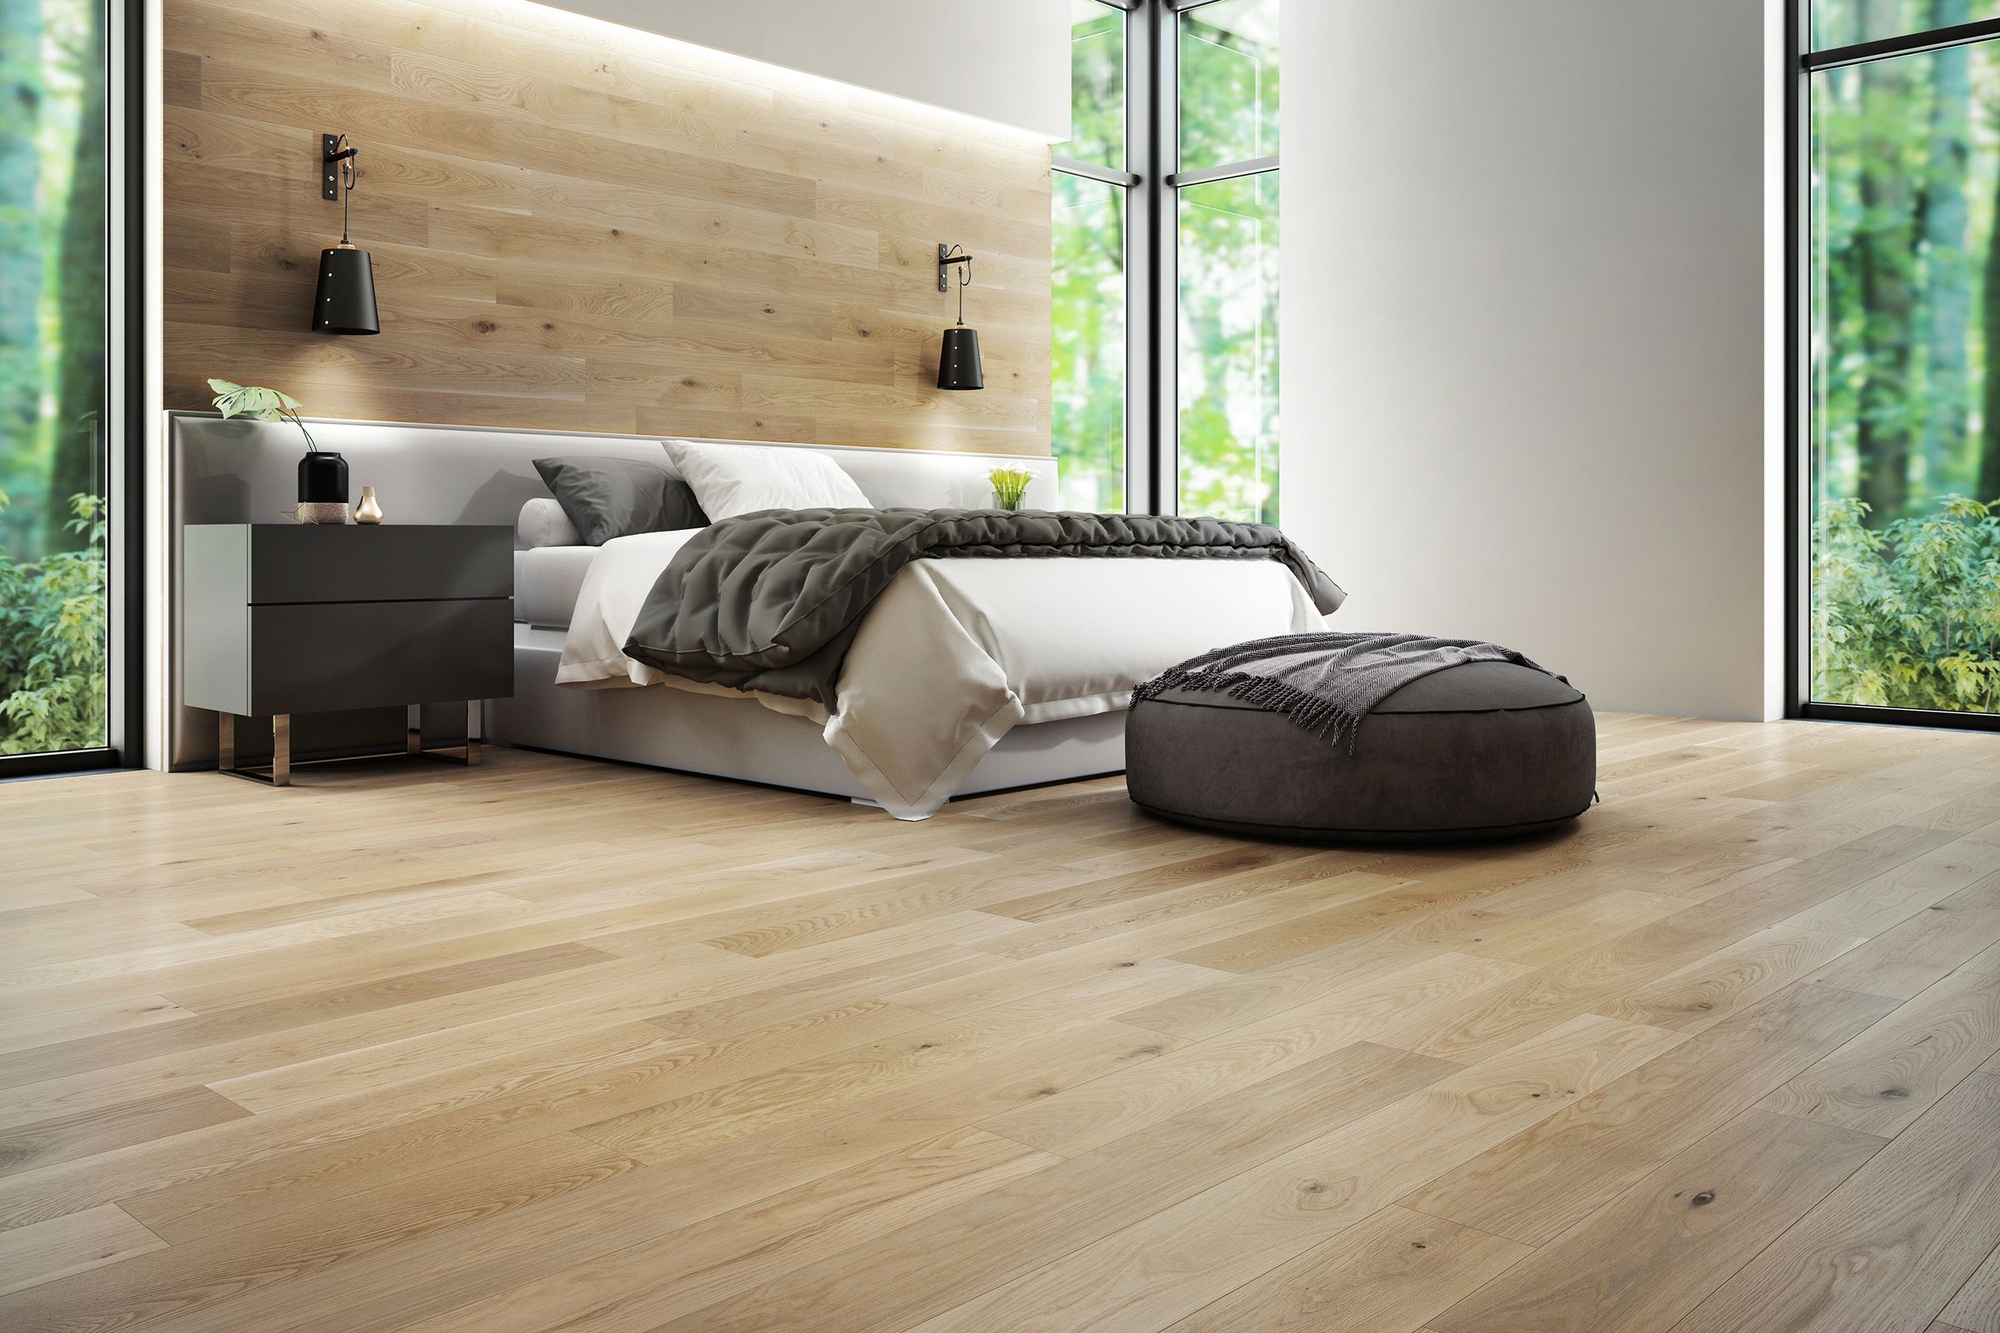 Bedroom with pale wood flooring